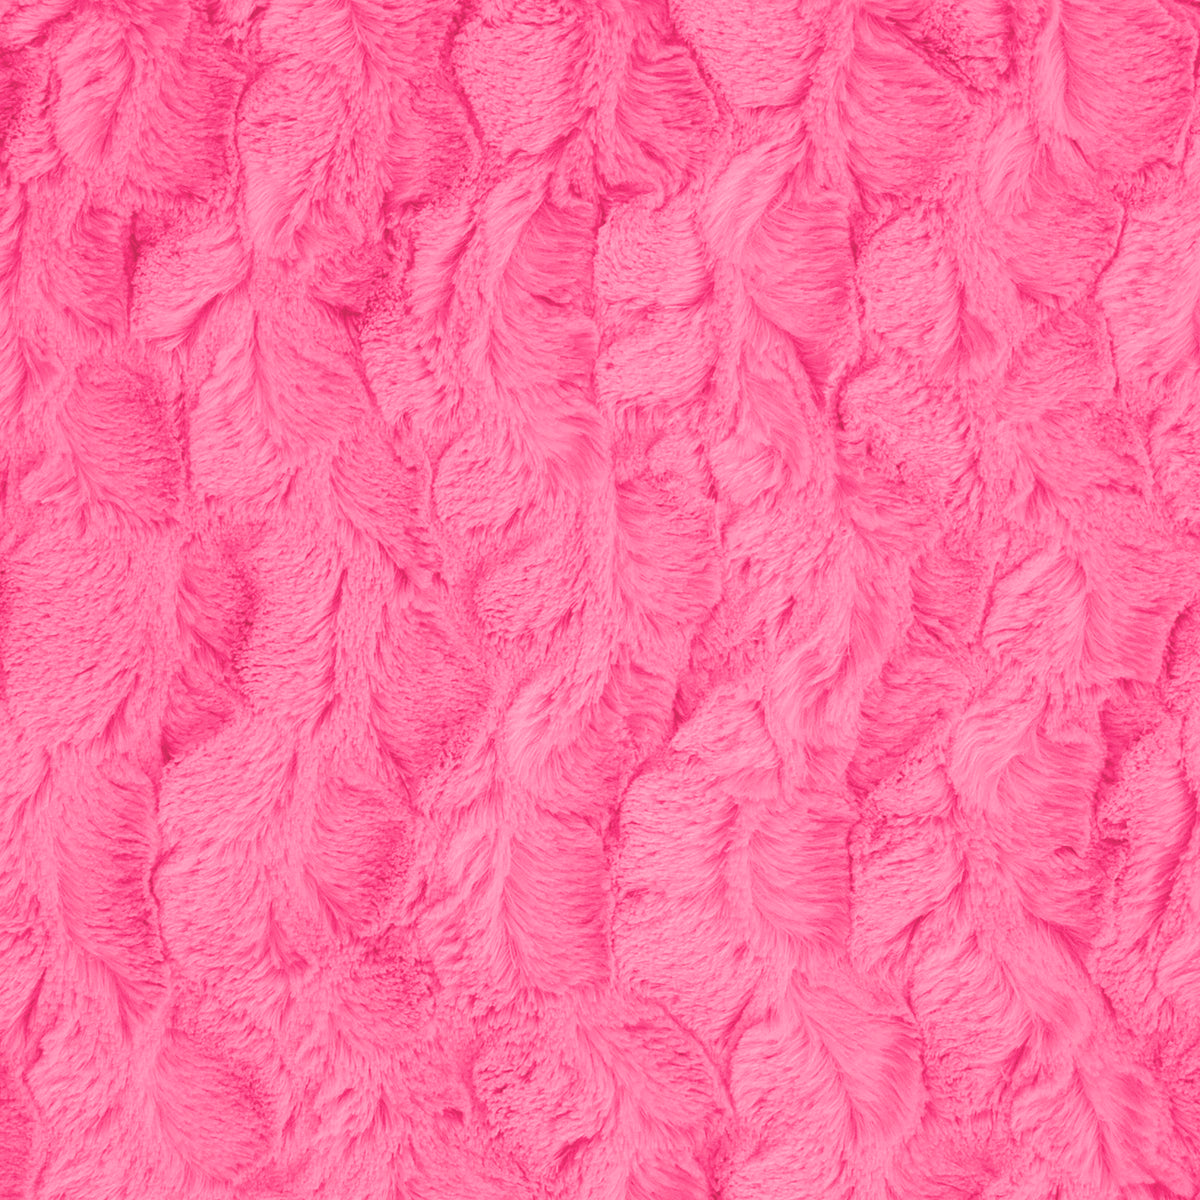 Clear Elastic: An Alternative Way to Ruffle Fabric – Bella Sunshine Designs